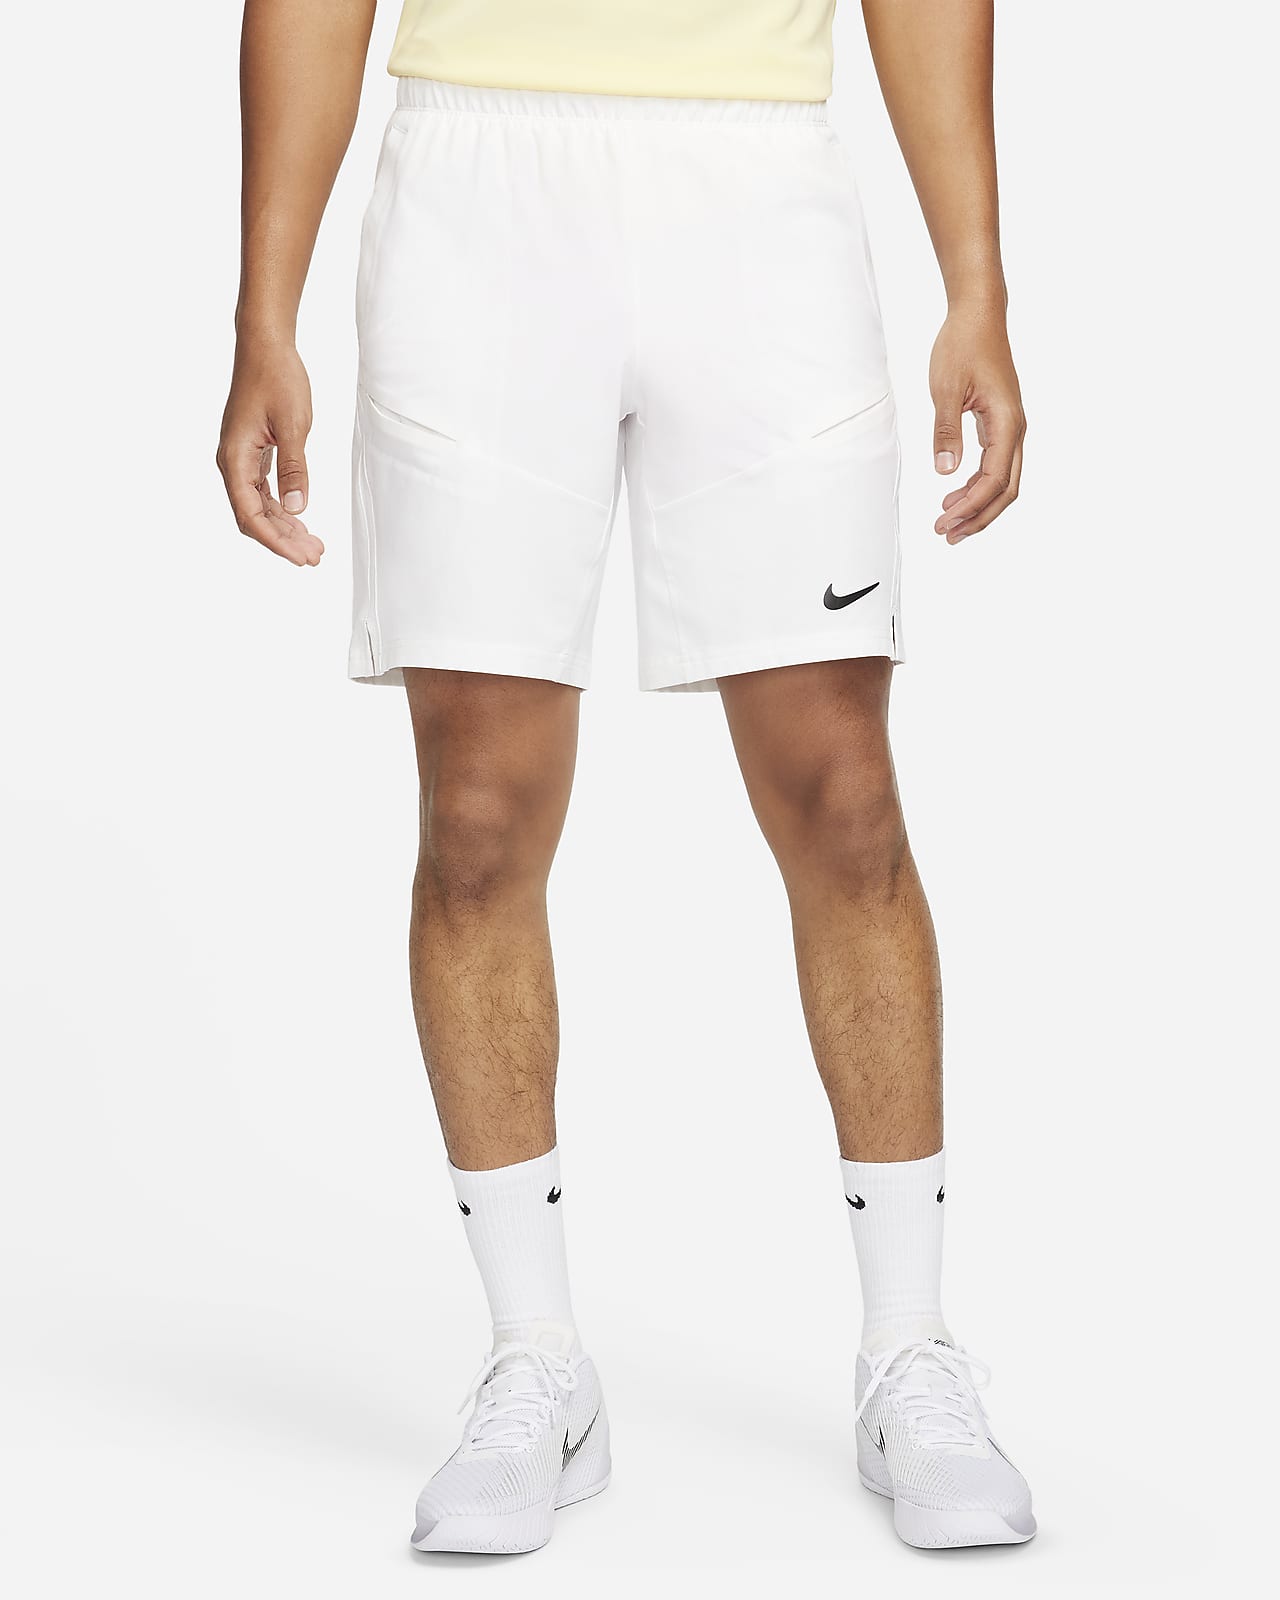 NikeCourt Advantage Herren-Tennisshorts (ca. 23 cm)